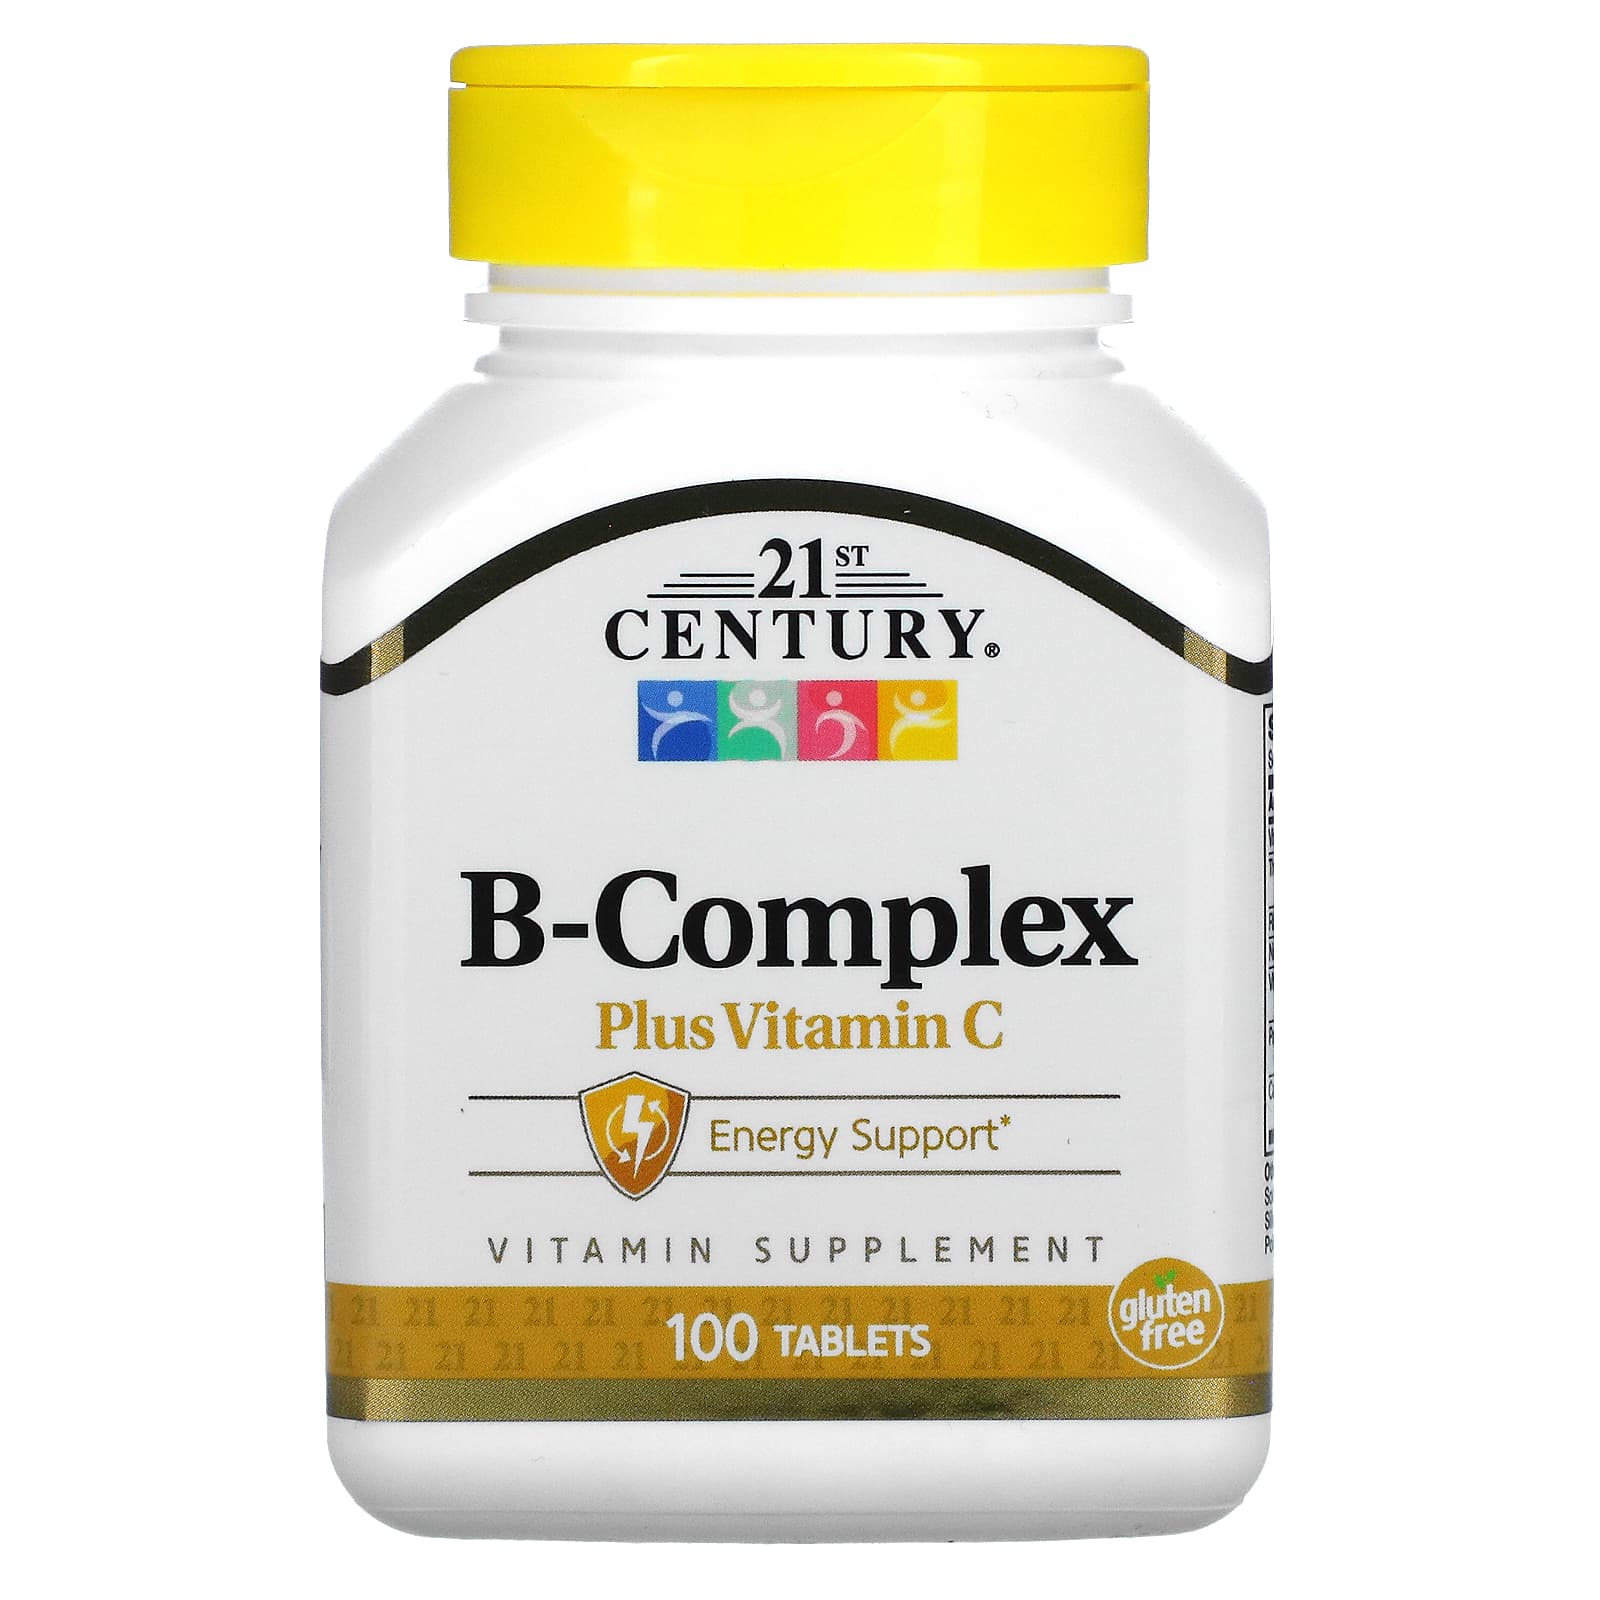 nederlaag snap Onderdrukker 21st Century, B-Complex Plus Vitamin C, 100 Tablets